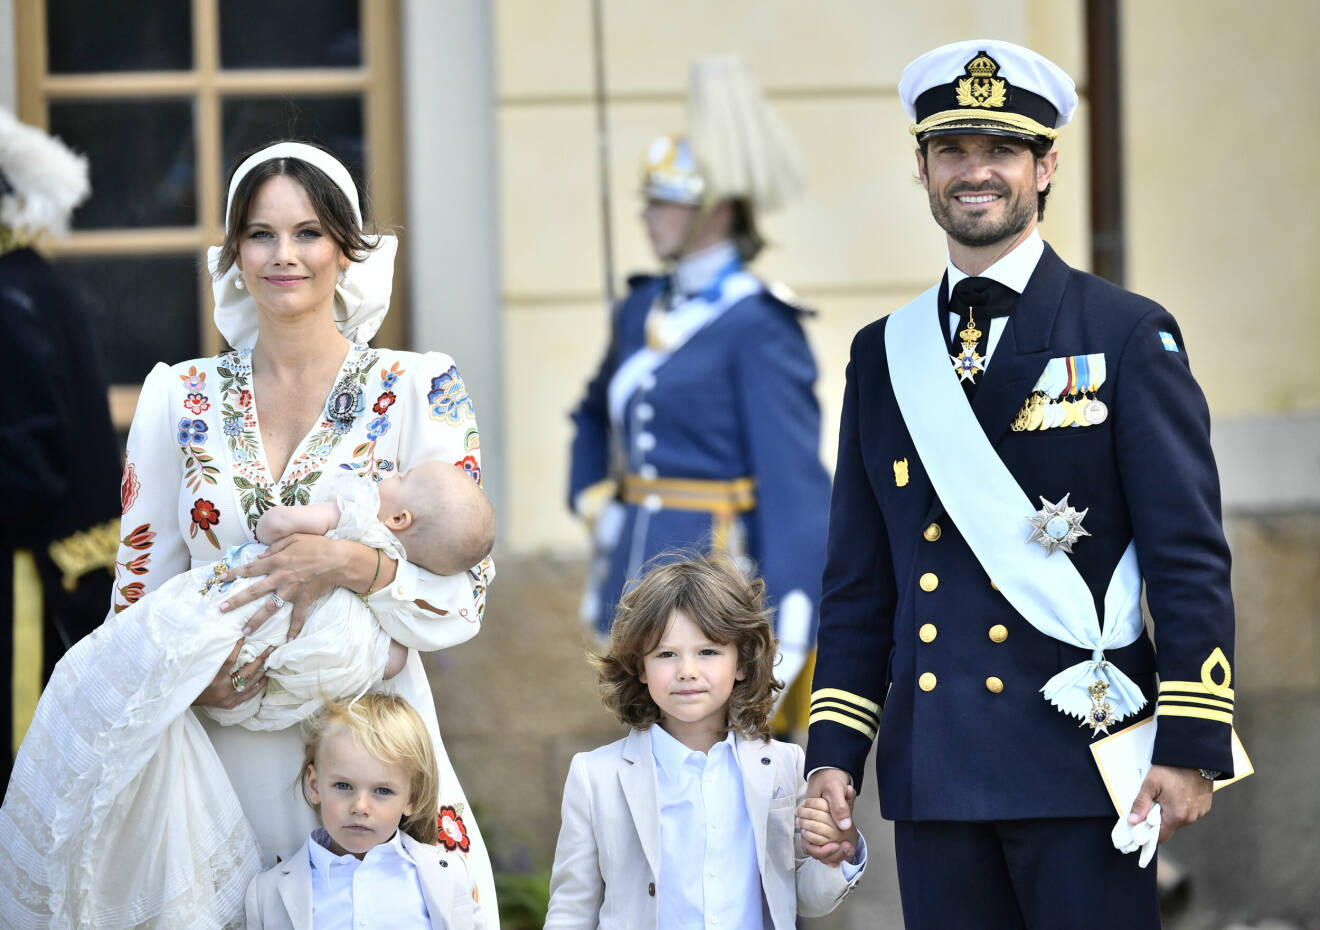 Prinsessan Sofia som håller prins Julian, prins Gabriel, prins Alexander och prins Carl Philip efter prins Julians dop i Drottningholms slottskyrka.